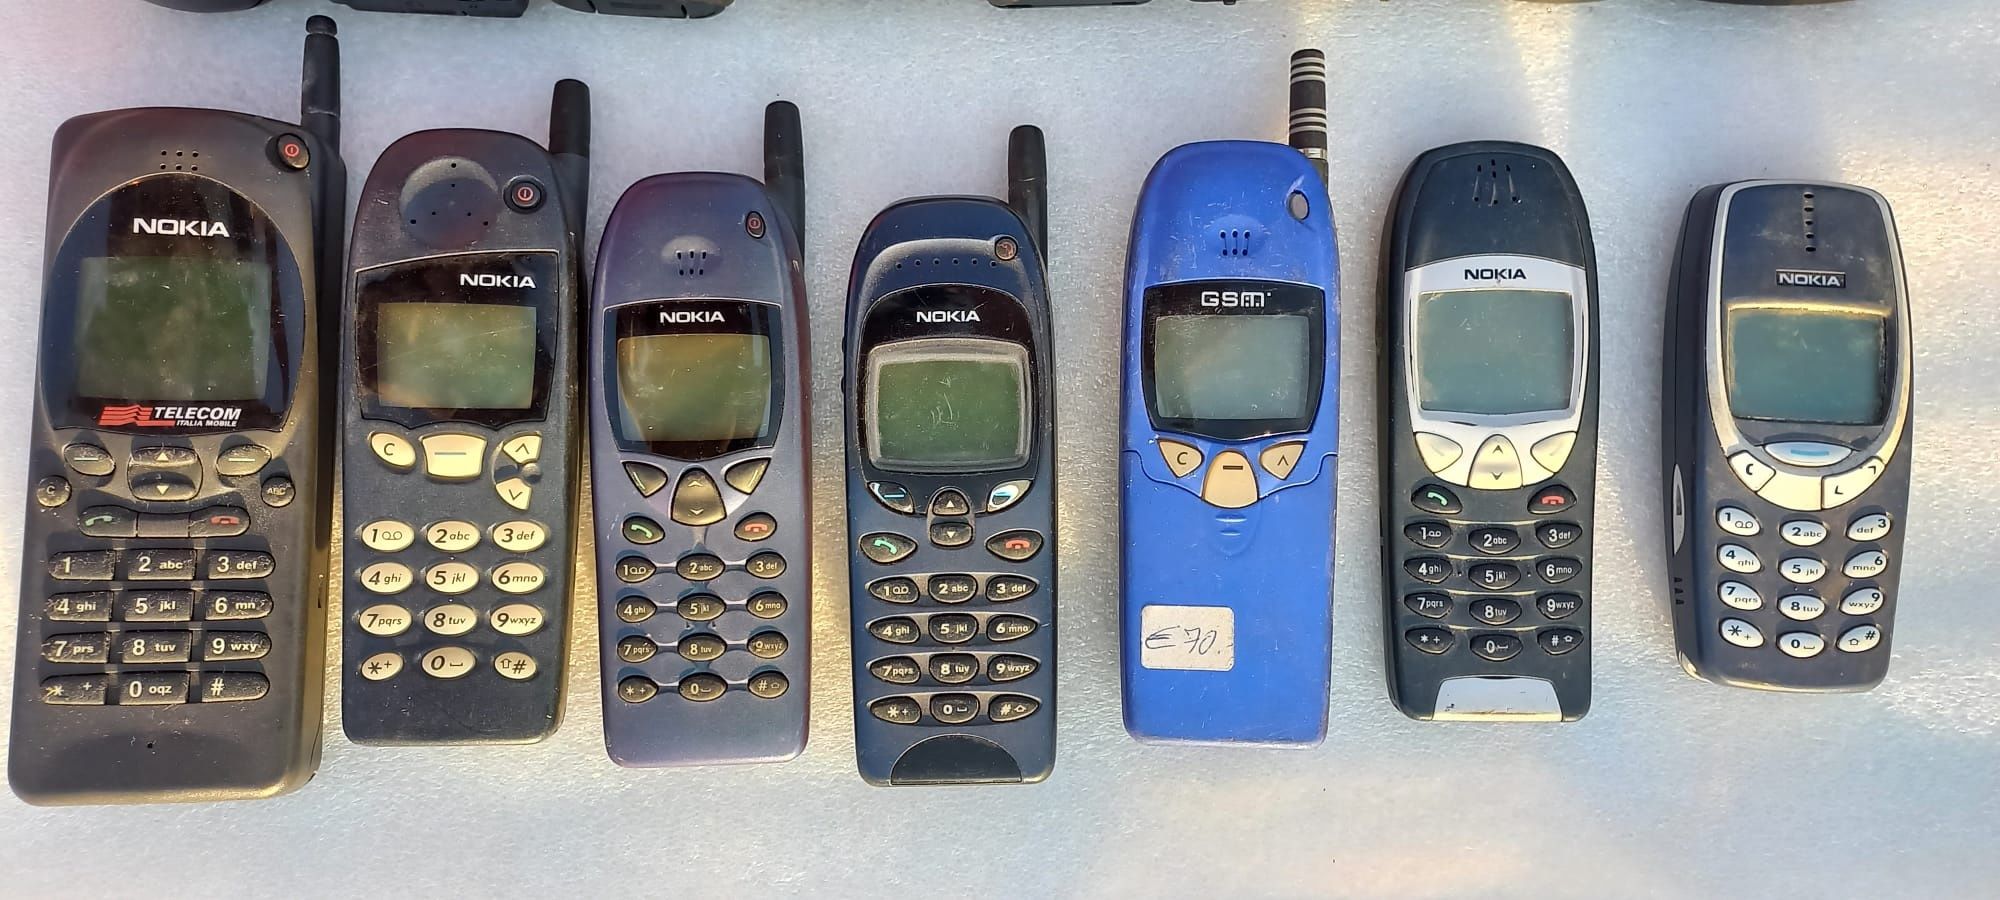 Telefoane mobile vechi de colectie GSM Nokia Philips Ericson Samsung